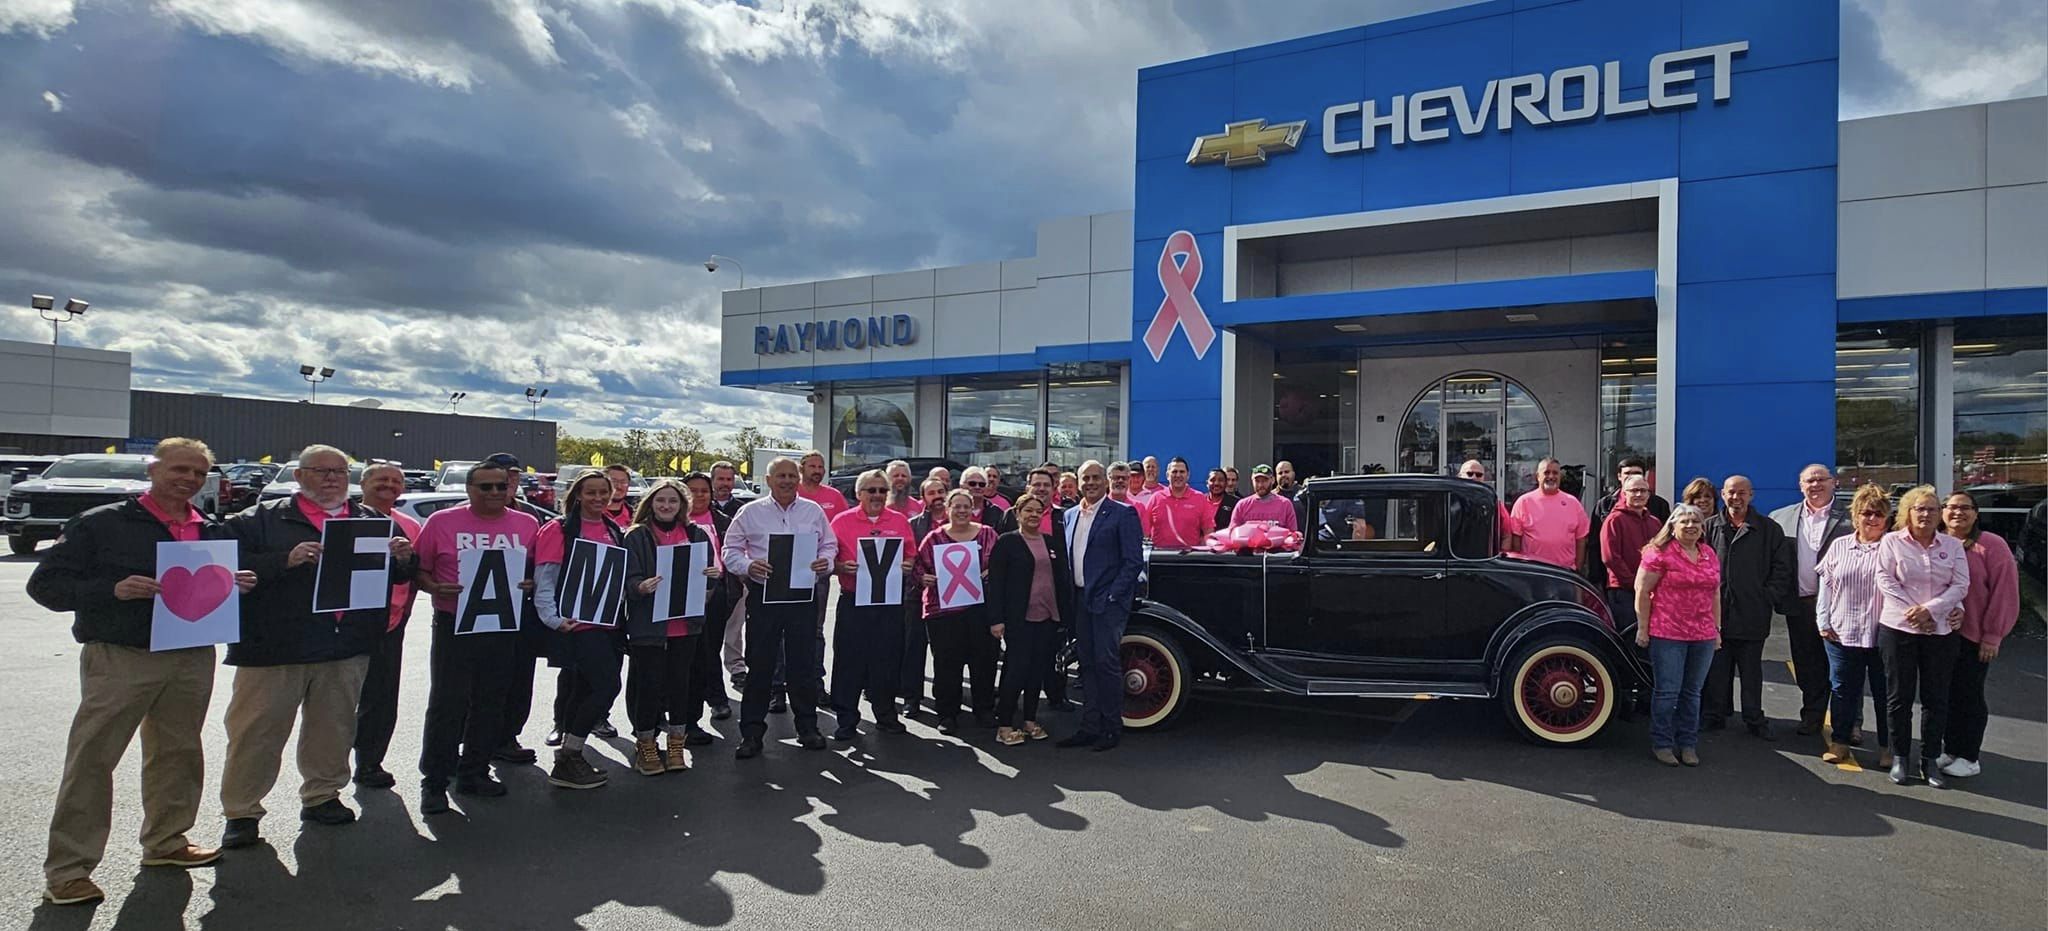 Raymond Chevrolet Breast Cancer Awareness